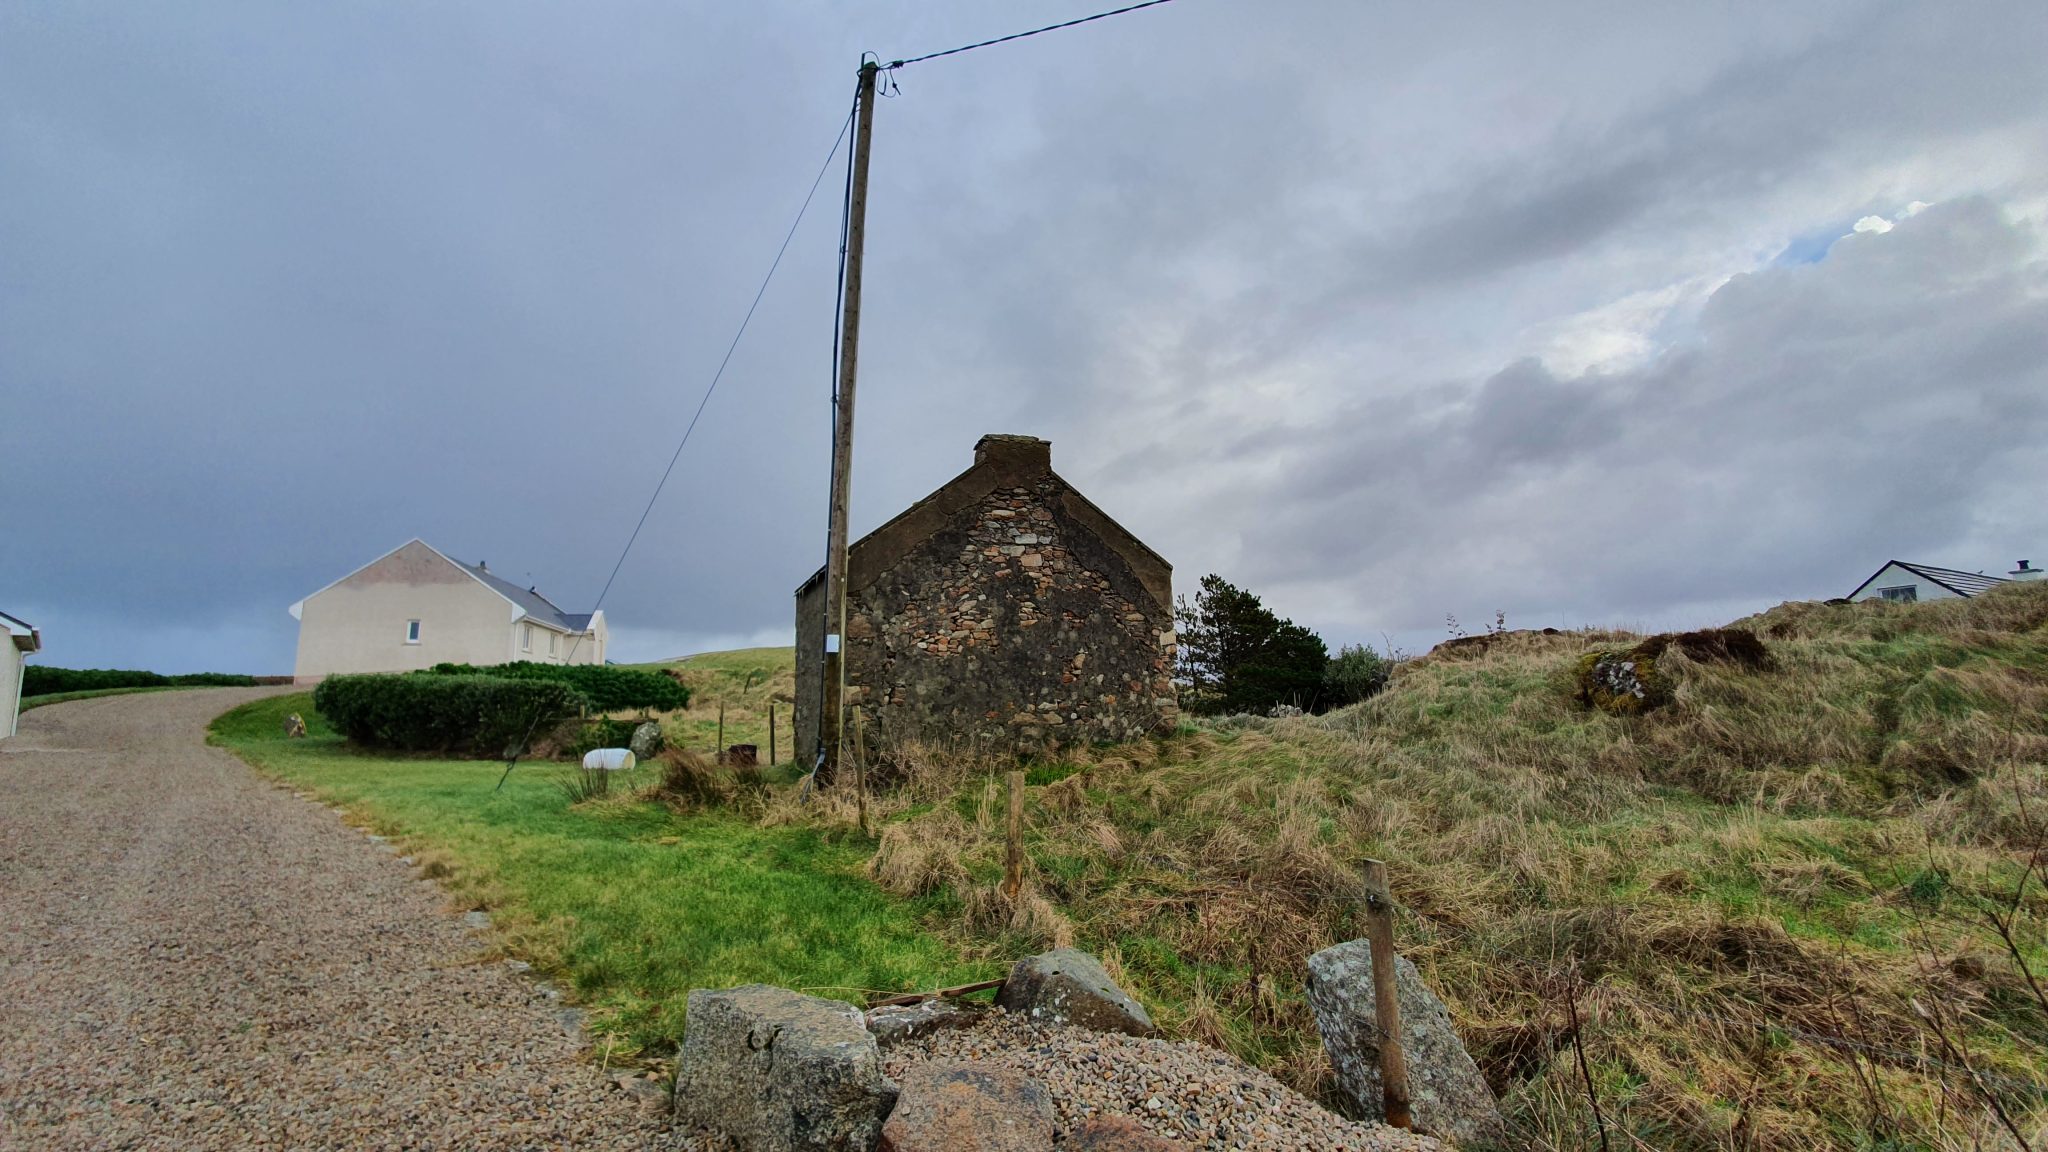 Lower Keadue Burtonport – site with a stone barn.